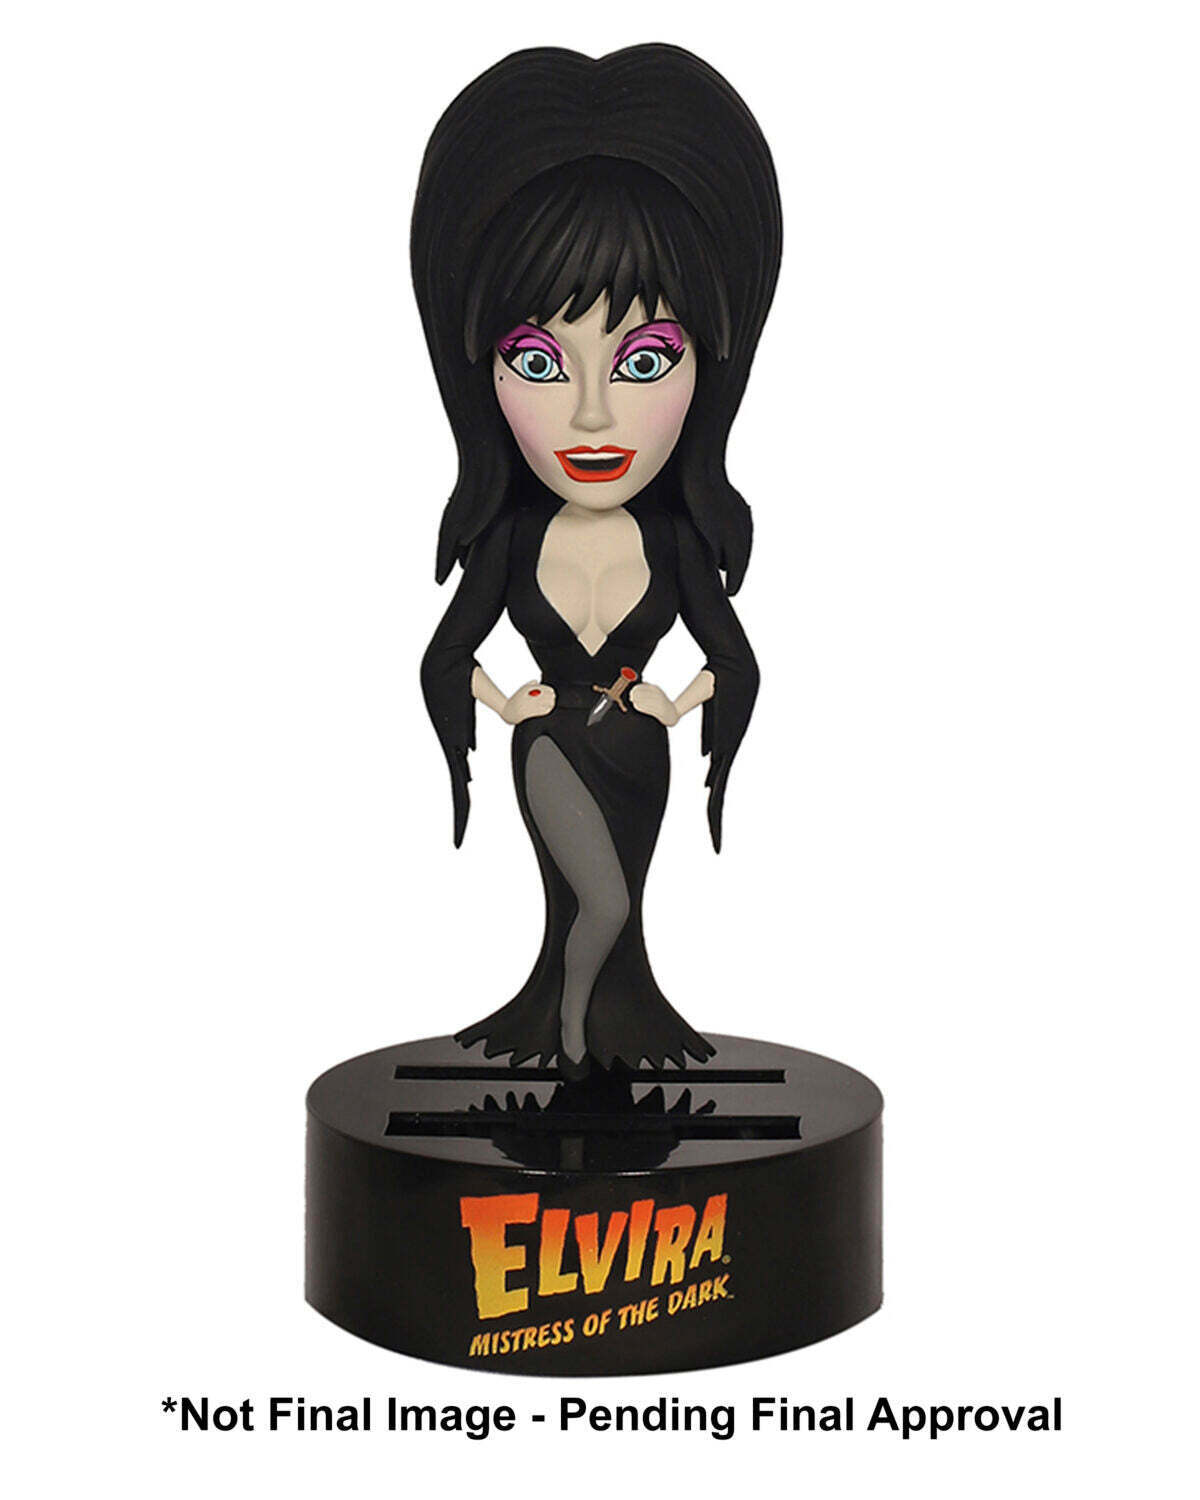 Elvira Mistress of the Dark NECA Elvira Bobblehead